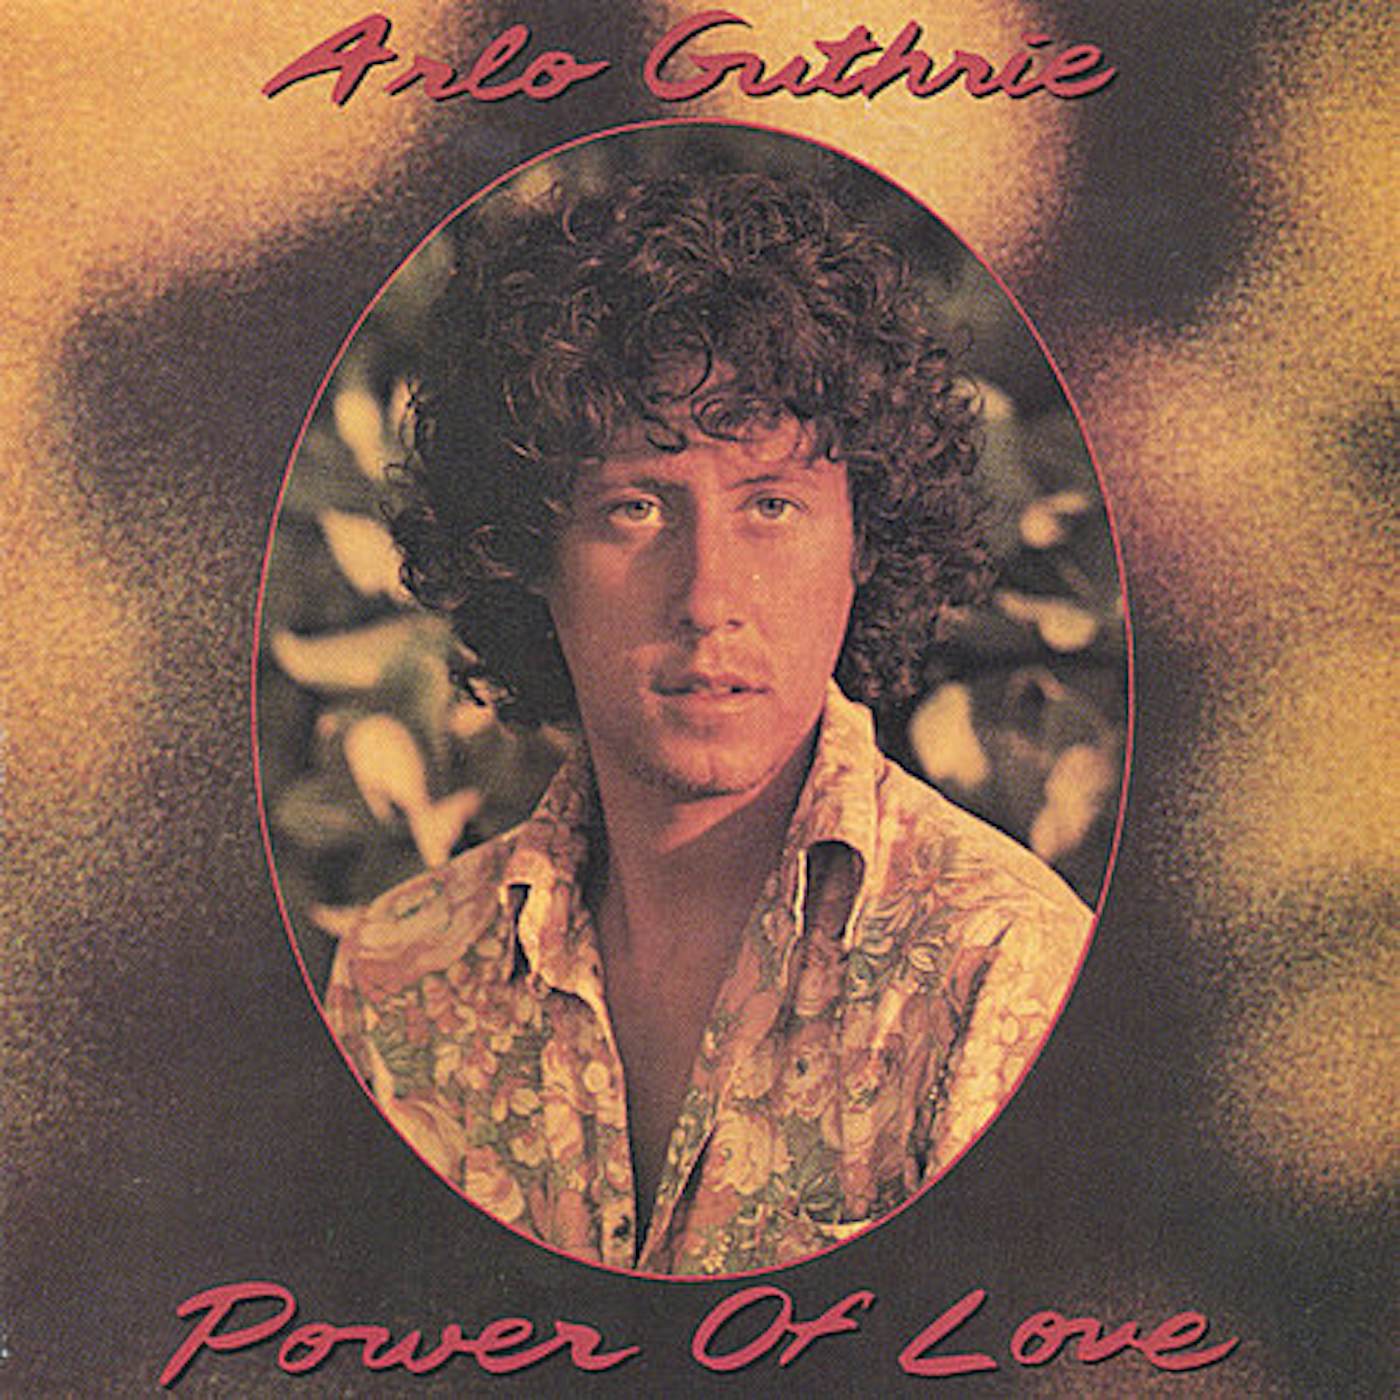 Arlo Guthrie POWER OF LOVE CD